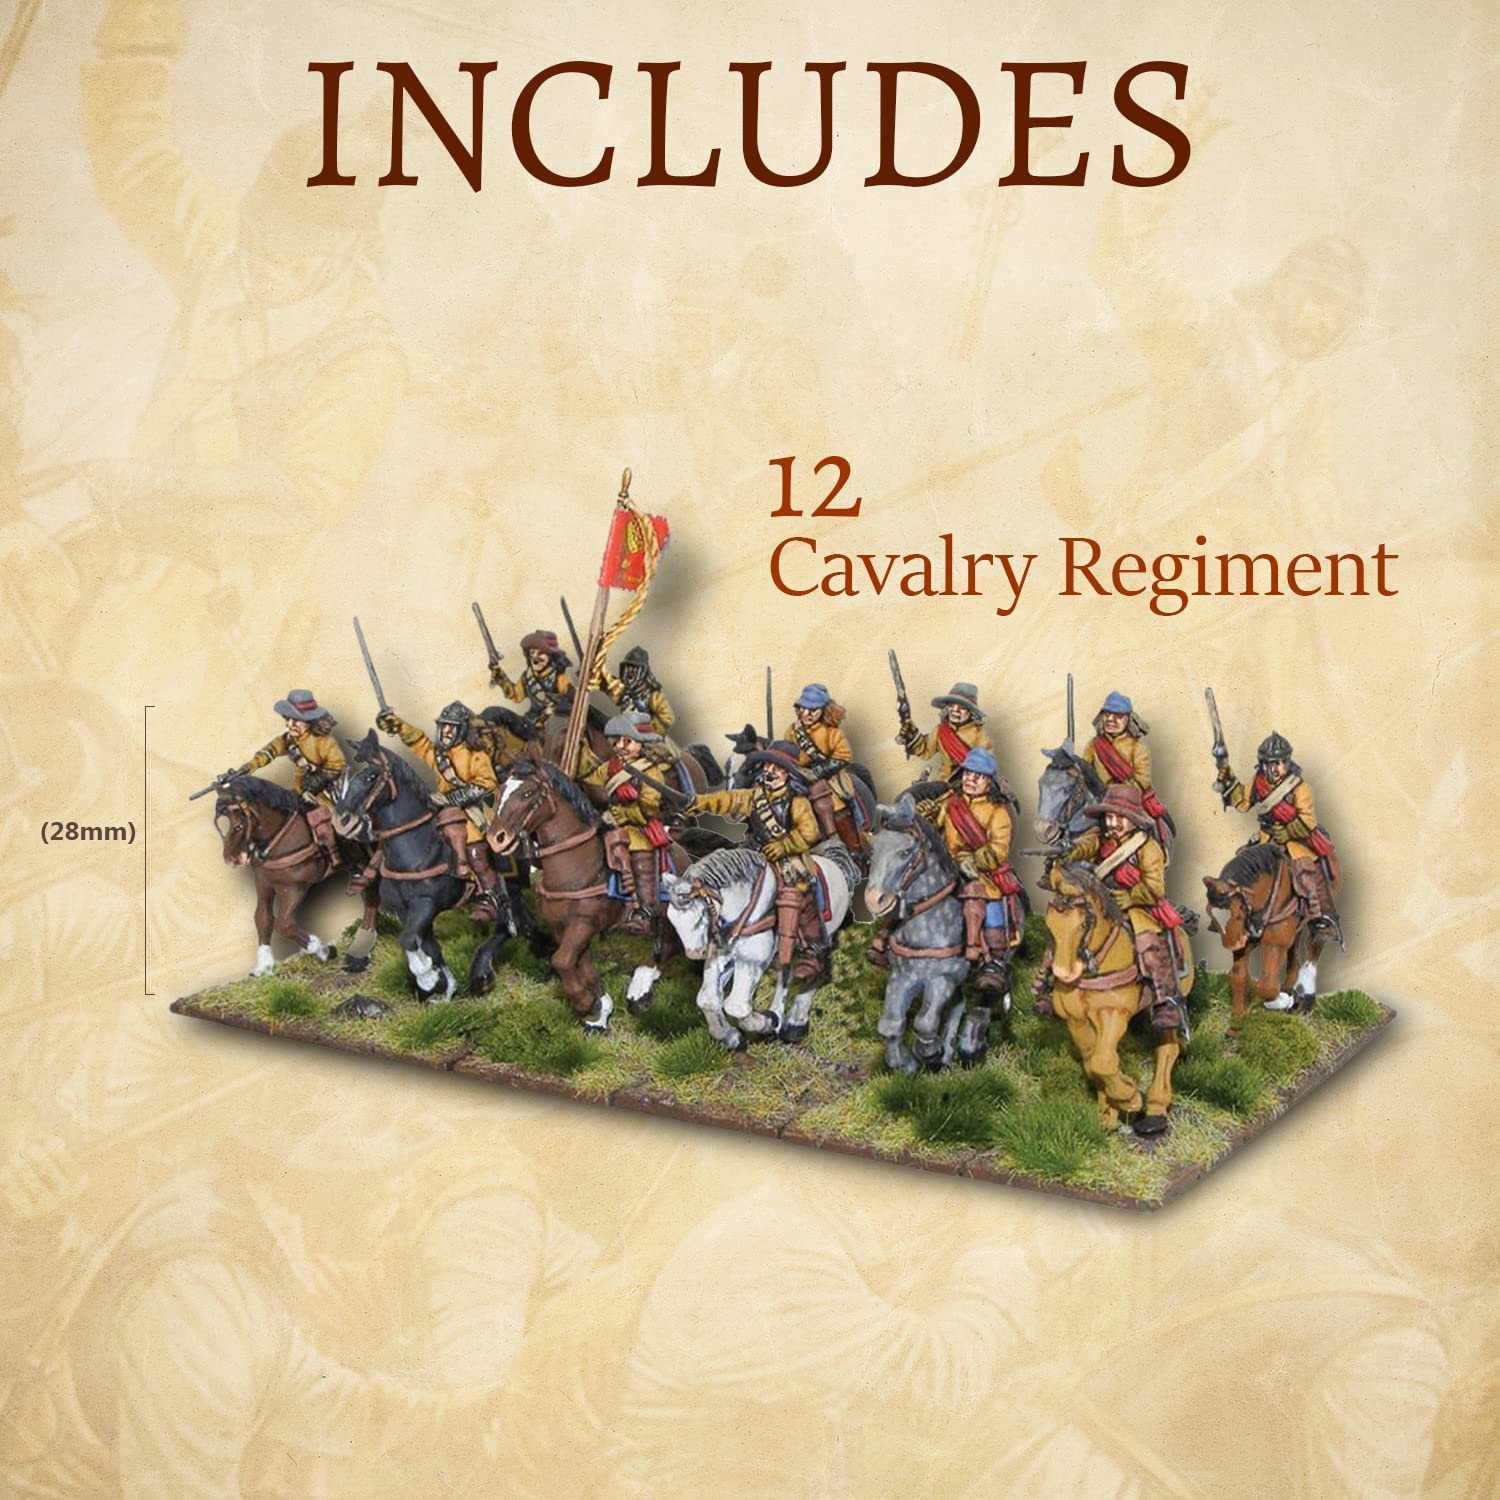 Pike & Shotte: The English Civil Wars 1642 - 1652: Cavalry Regiment